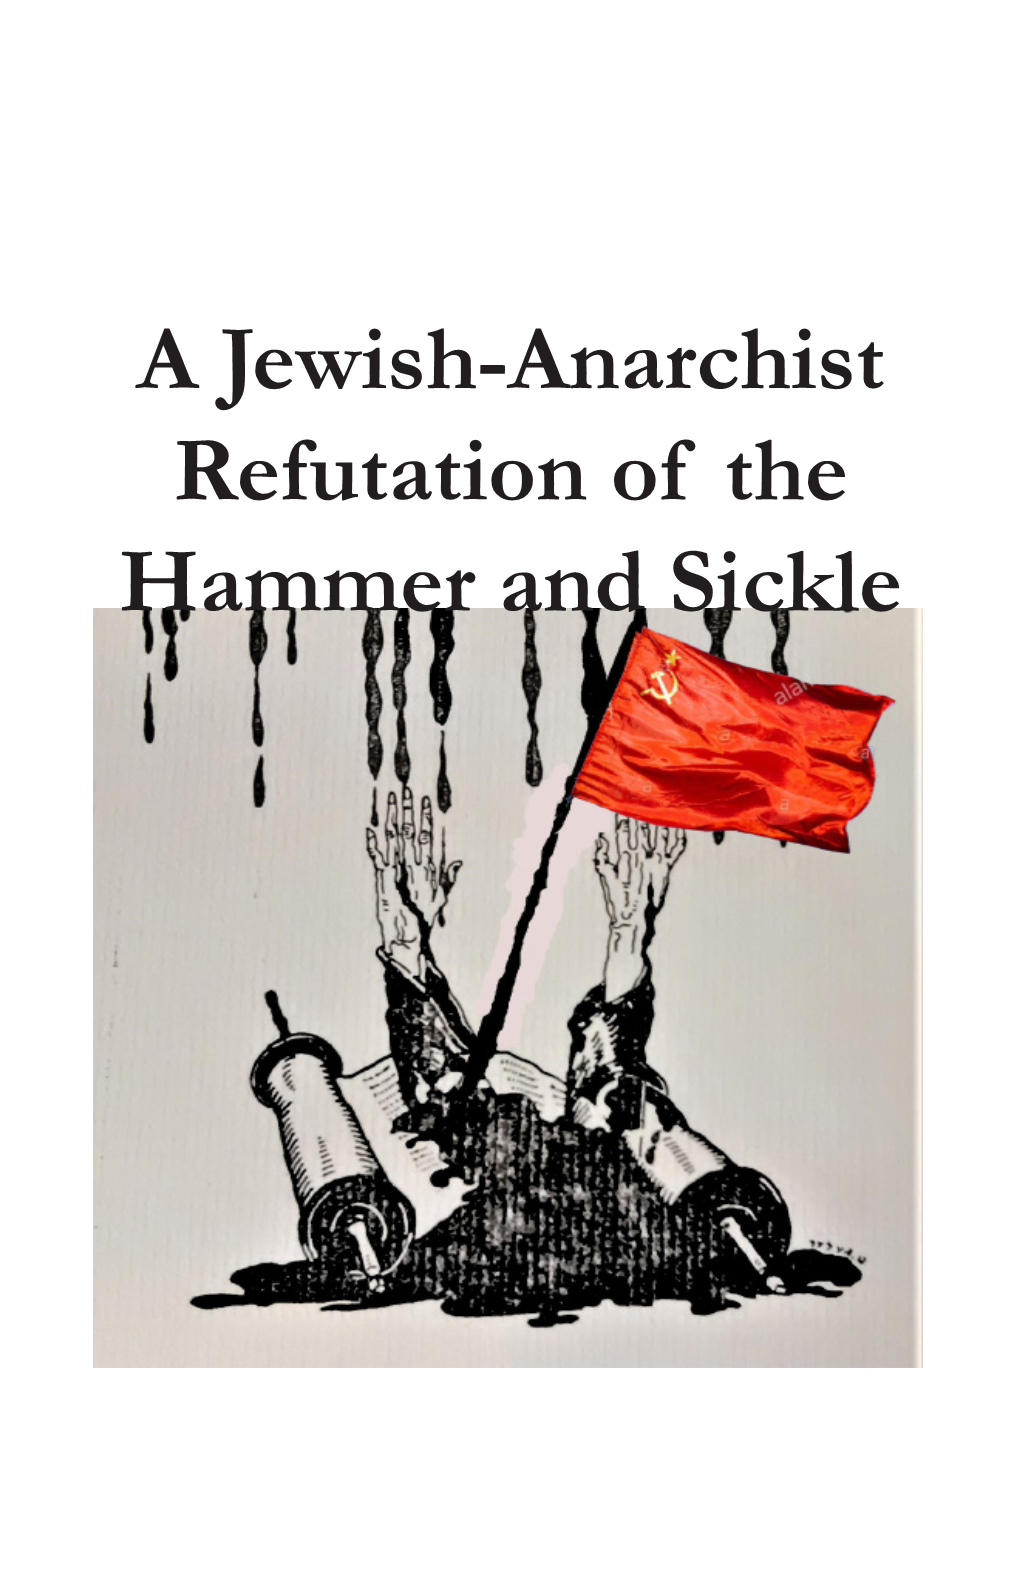 Jews Against Bolshevism-Scroll